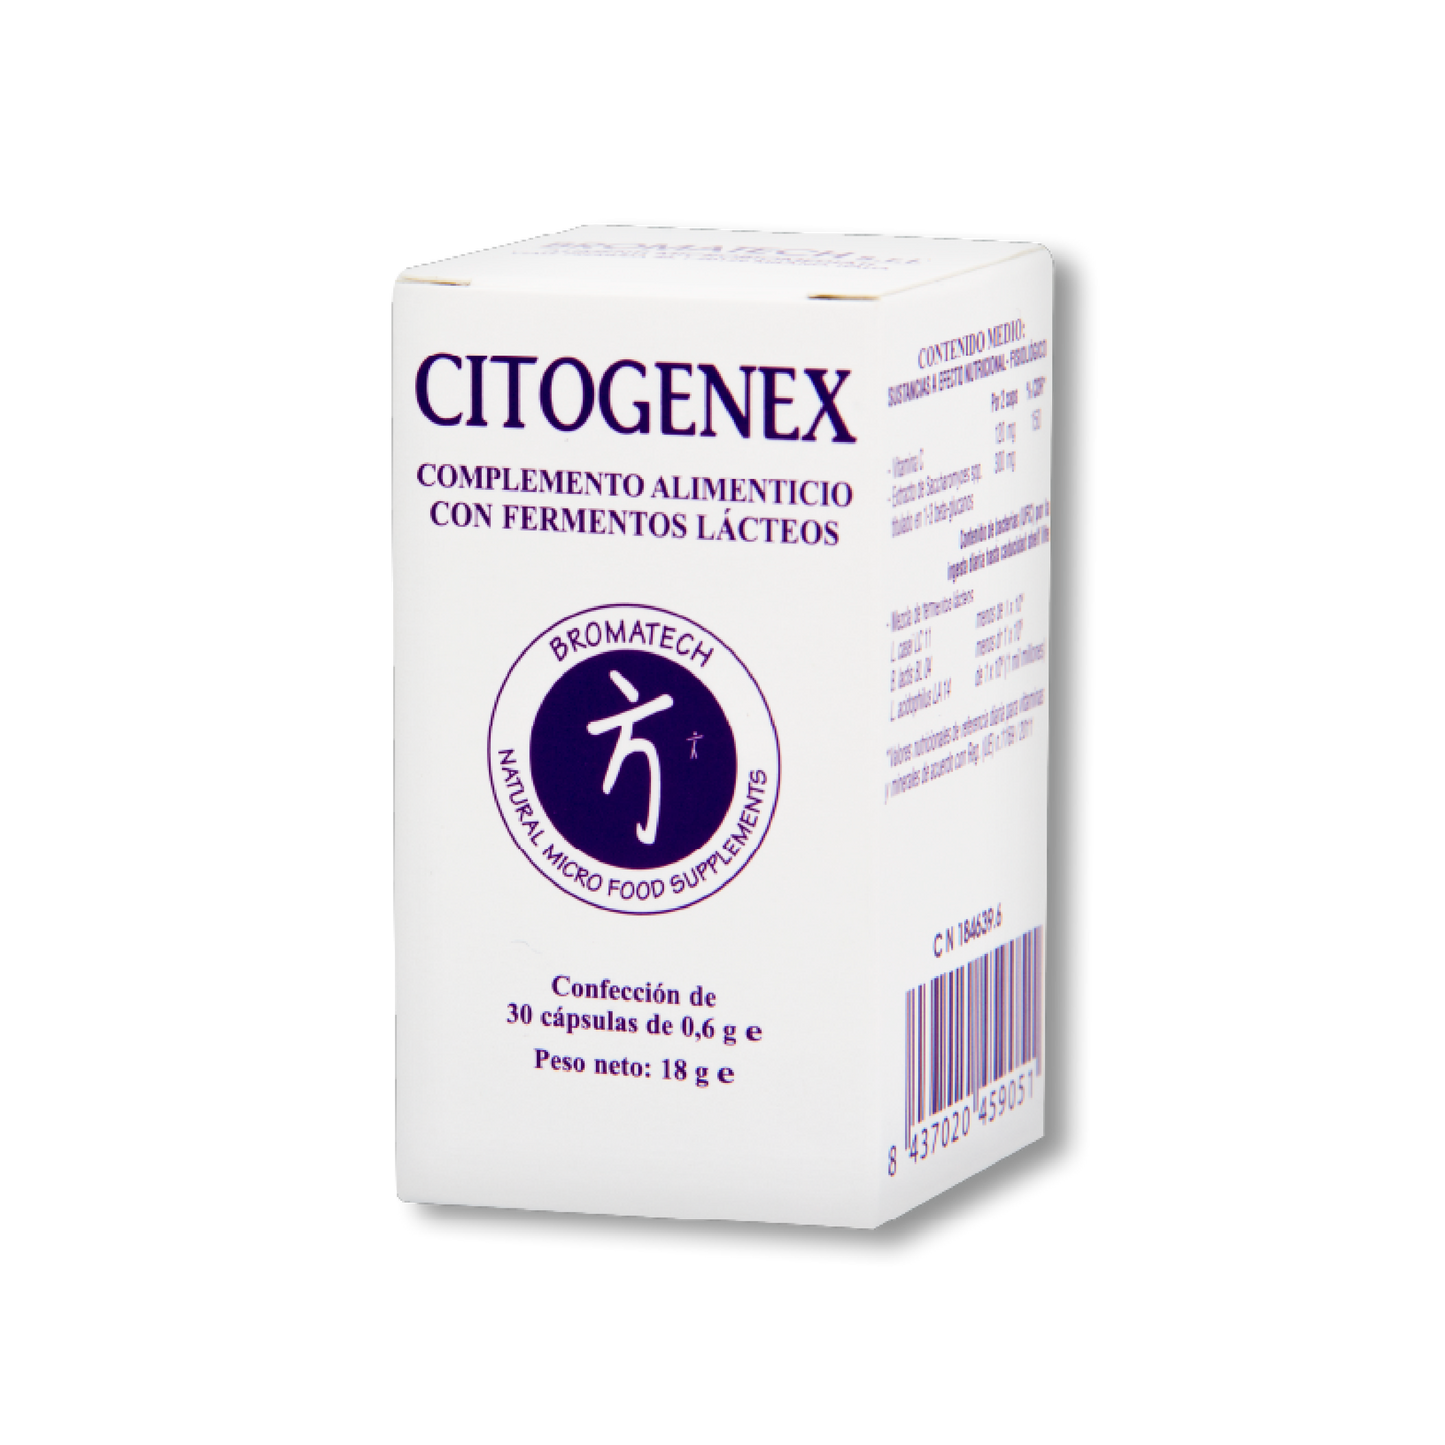 Citogenex 30 cápsulas | Bromatech - Dietetica Ferrer